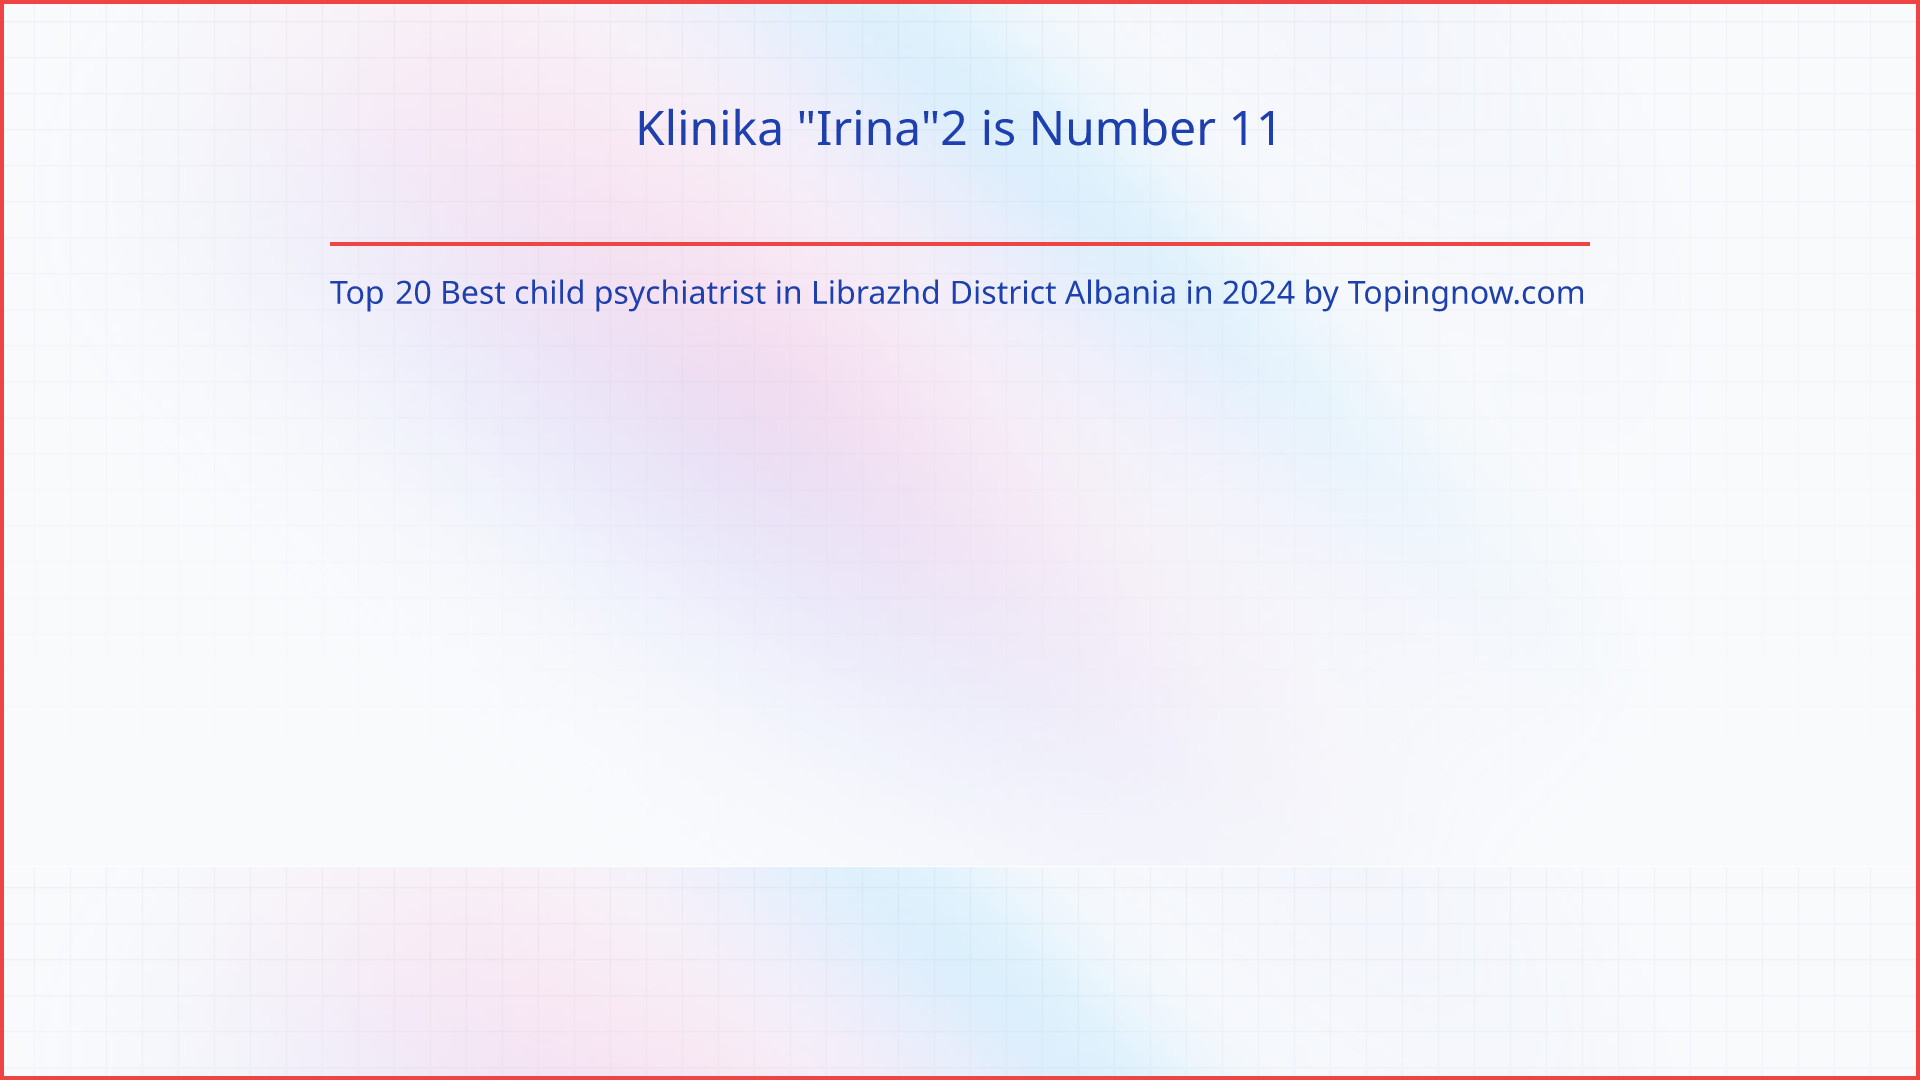 Klinika "Irina"2: Top 20 Best child psychiatrist in Librazhd District Albania in 2024